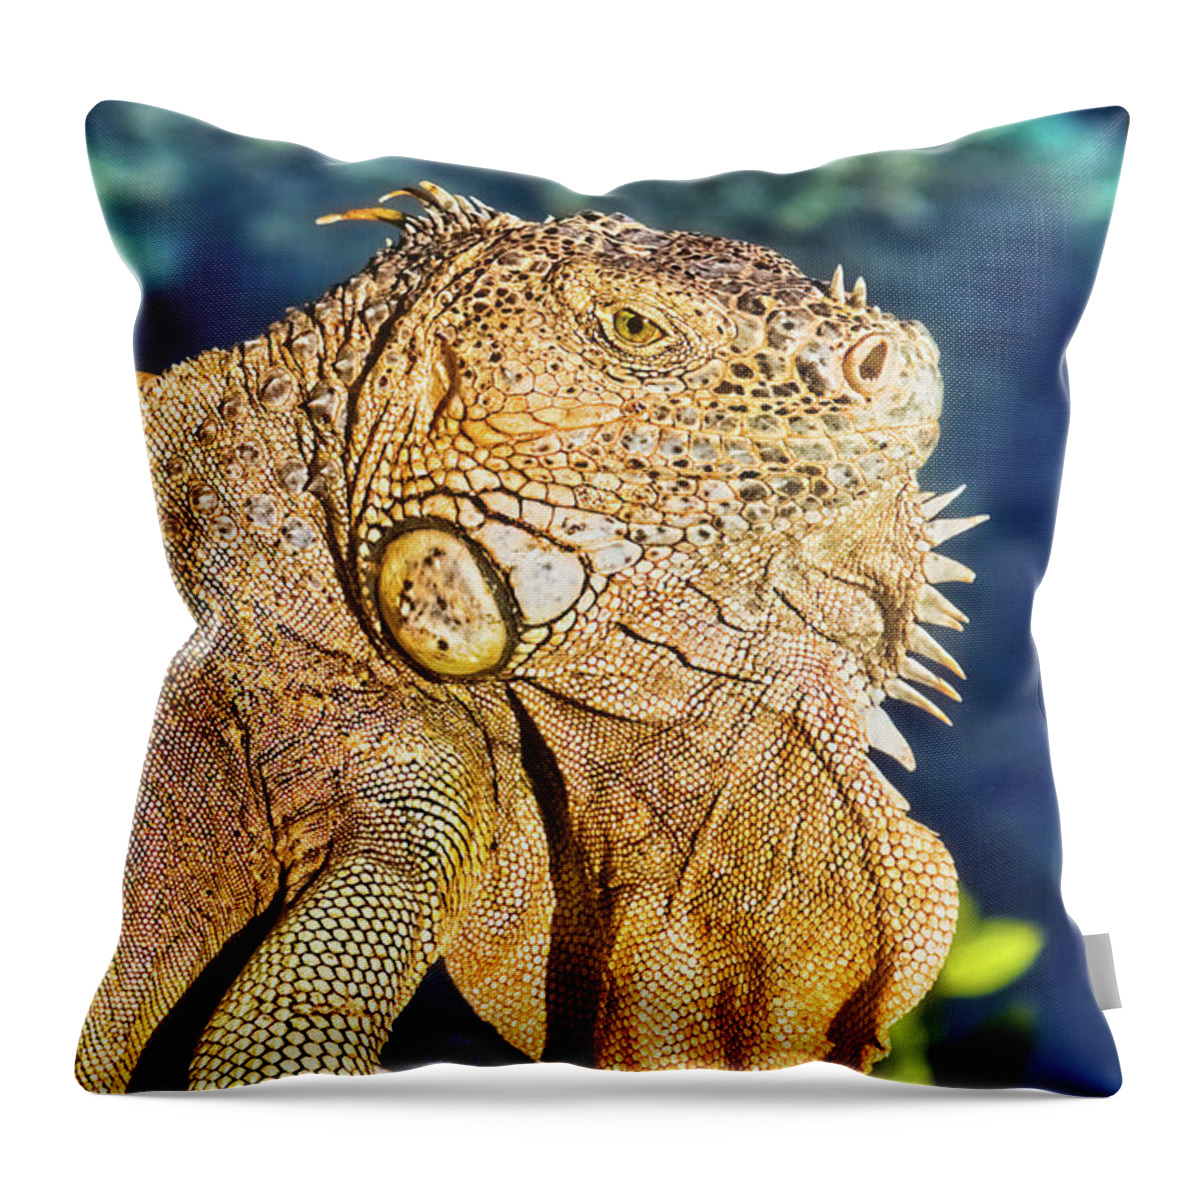 Iguana Throw Pillow featuring the photograph Giant iguana by Tatiana Travelways